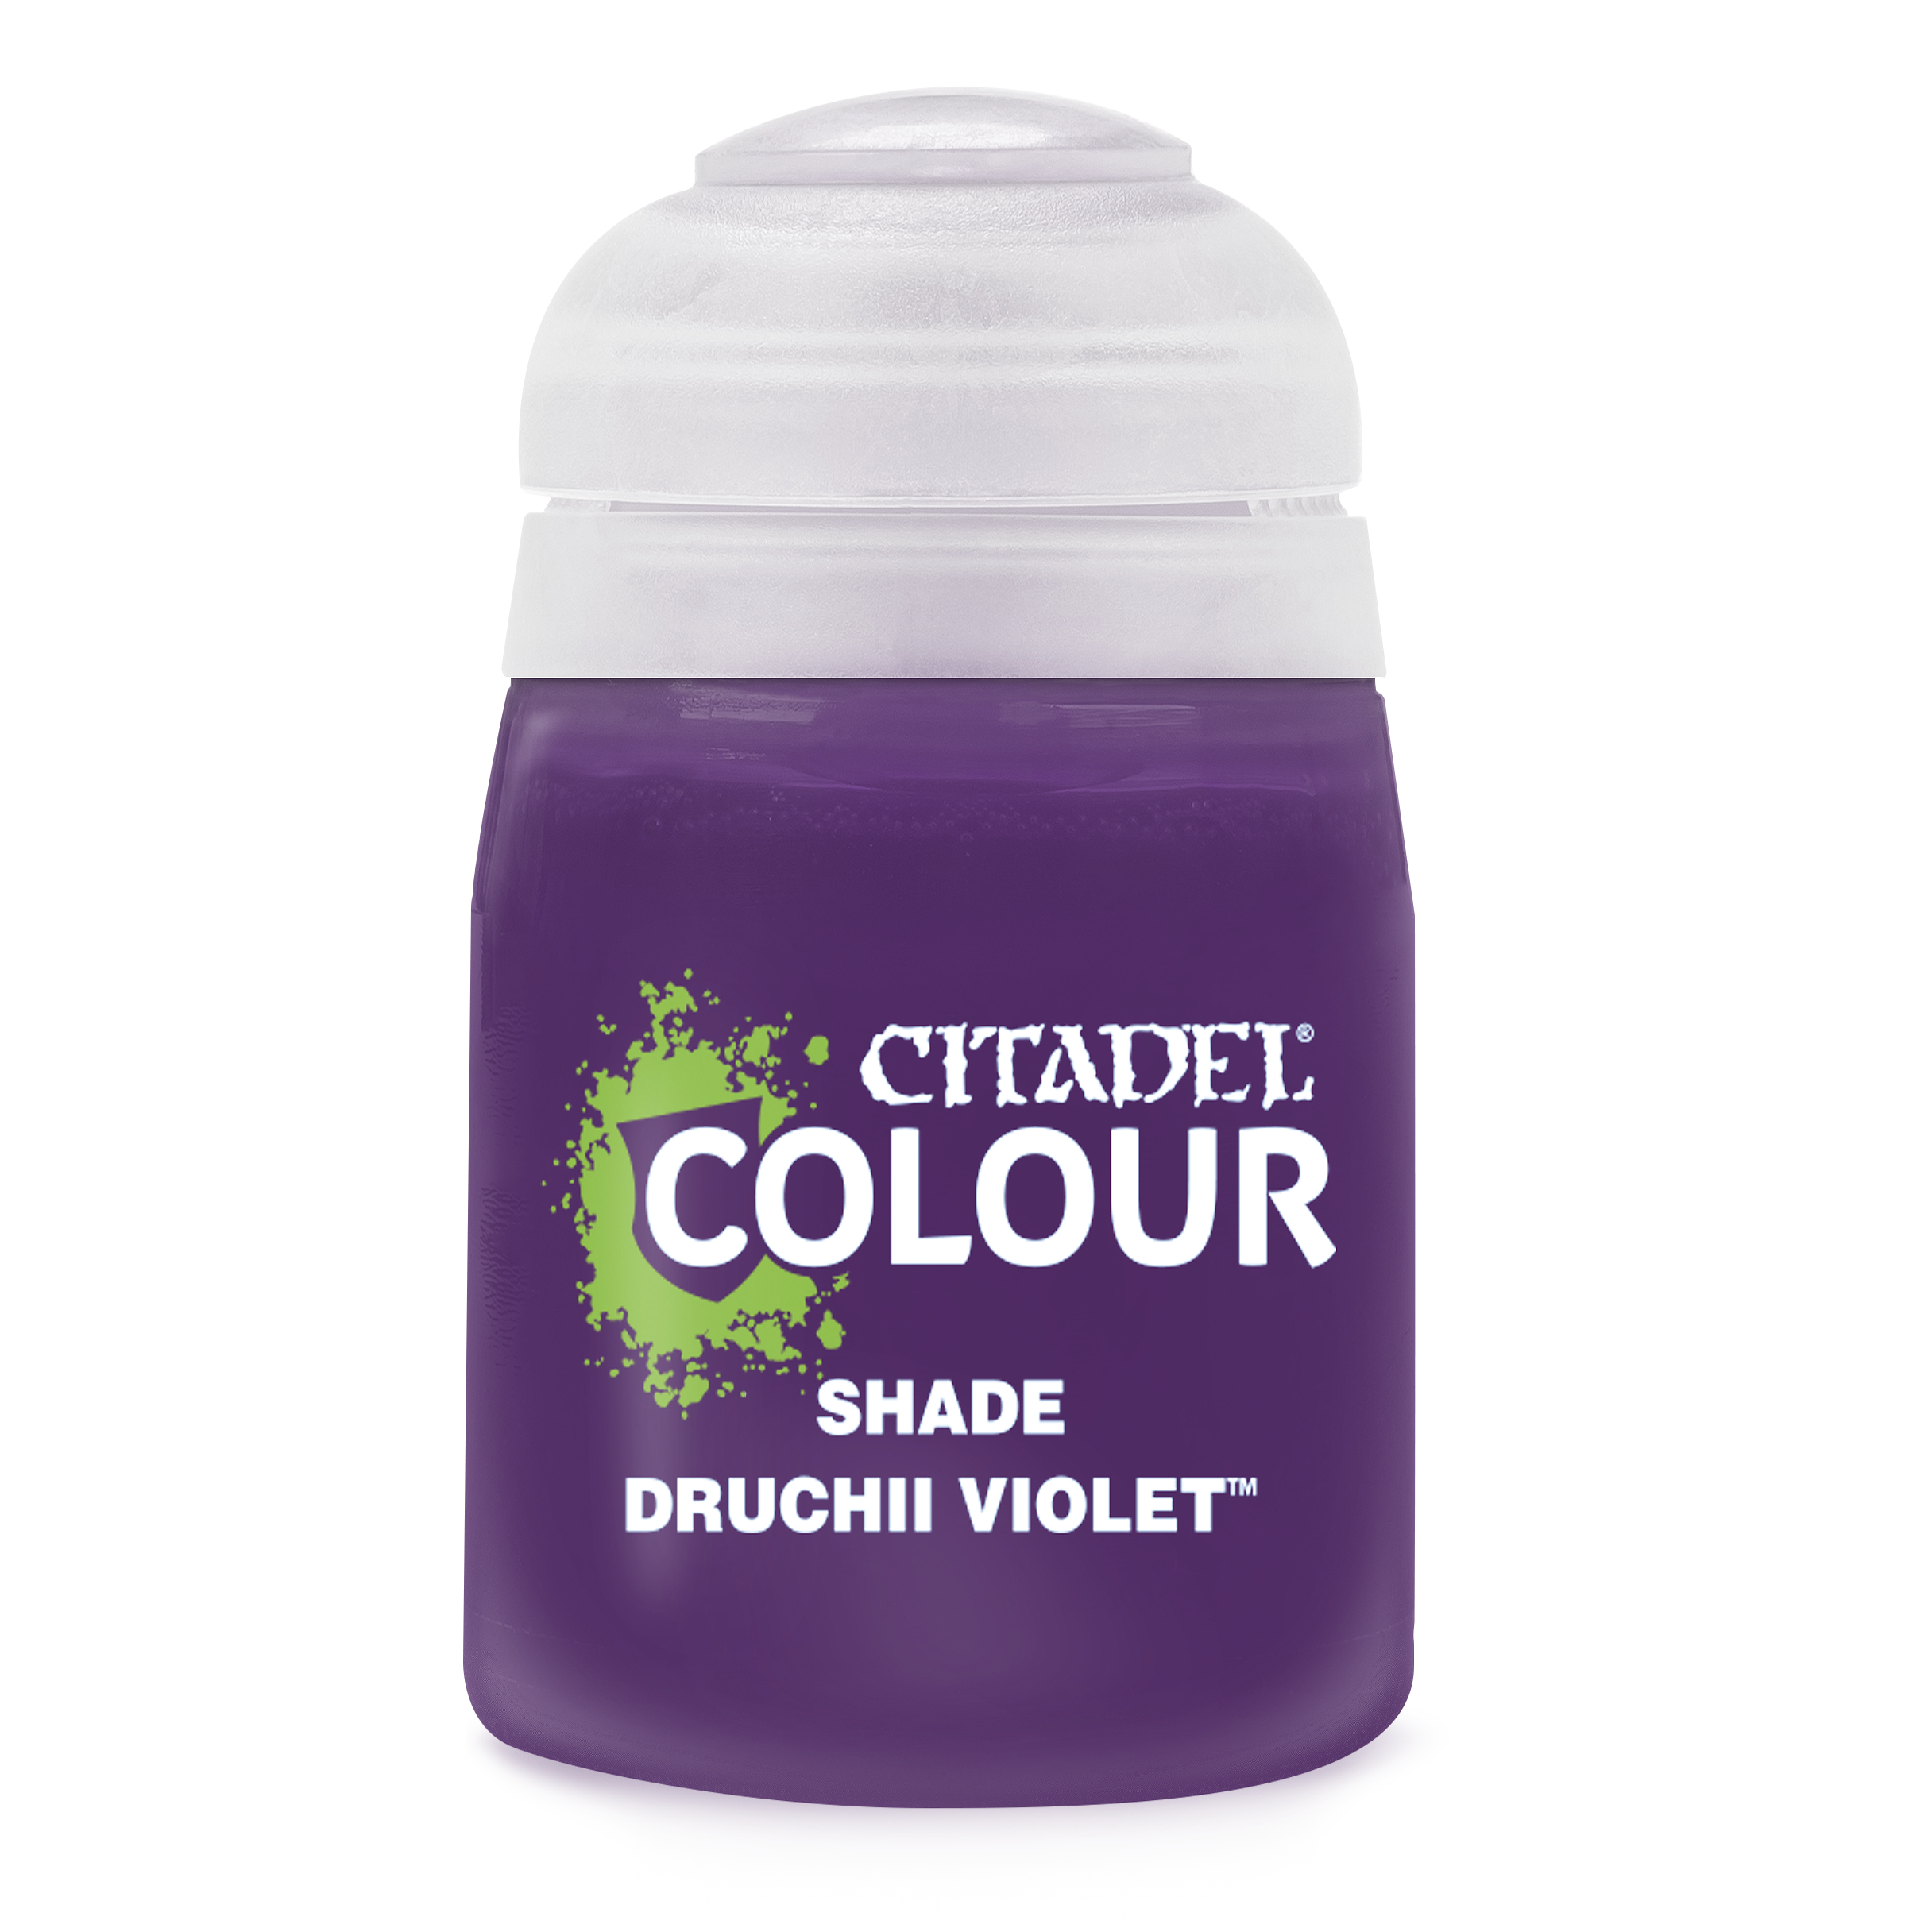 Druchii Violet Citadel Shade Paint | Lots Moore NSW